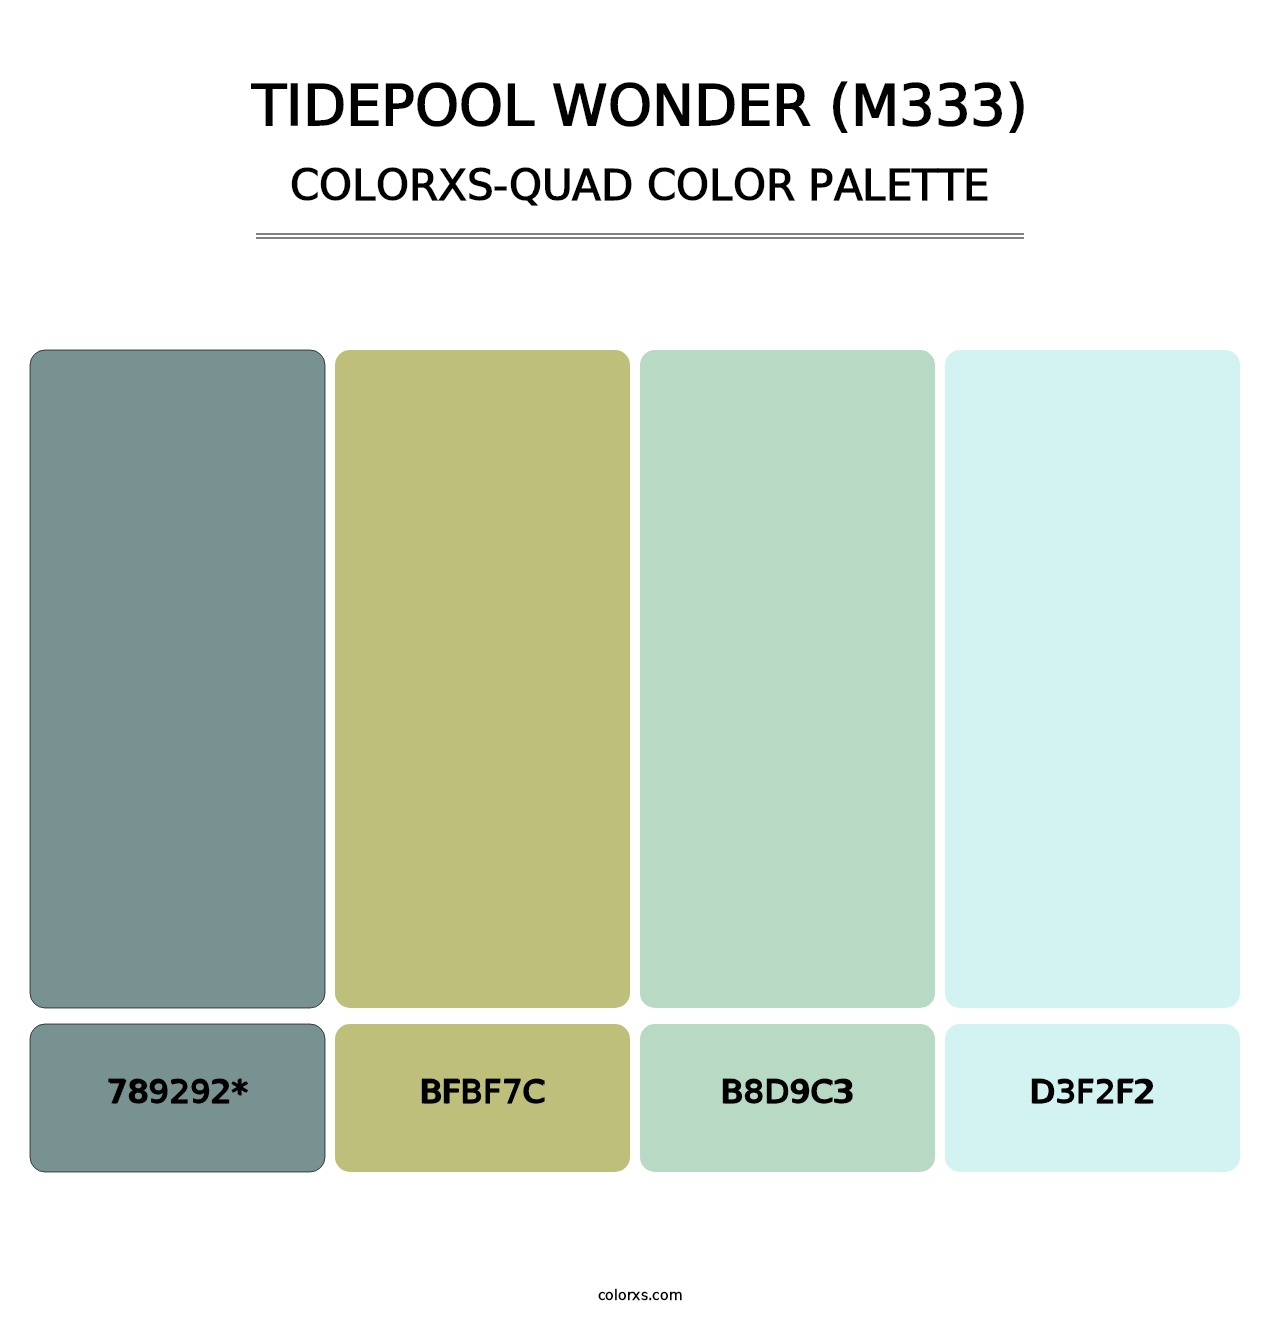 Tidepool Wonder (M333) - Colorxs Quad Palette